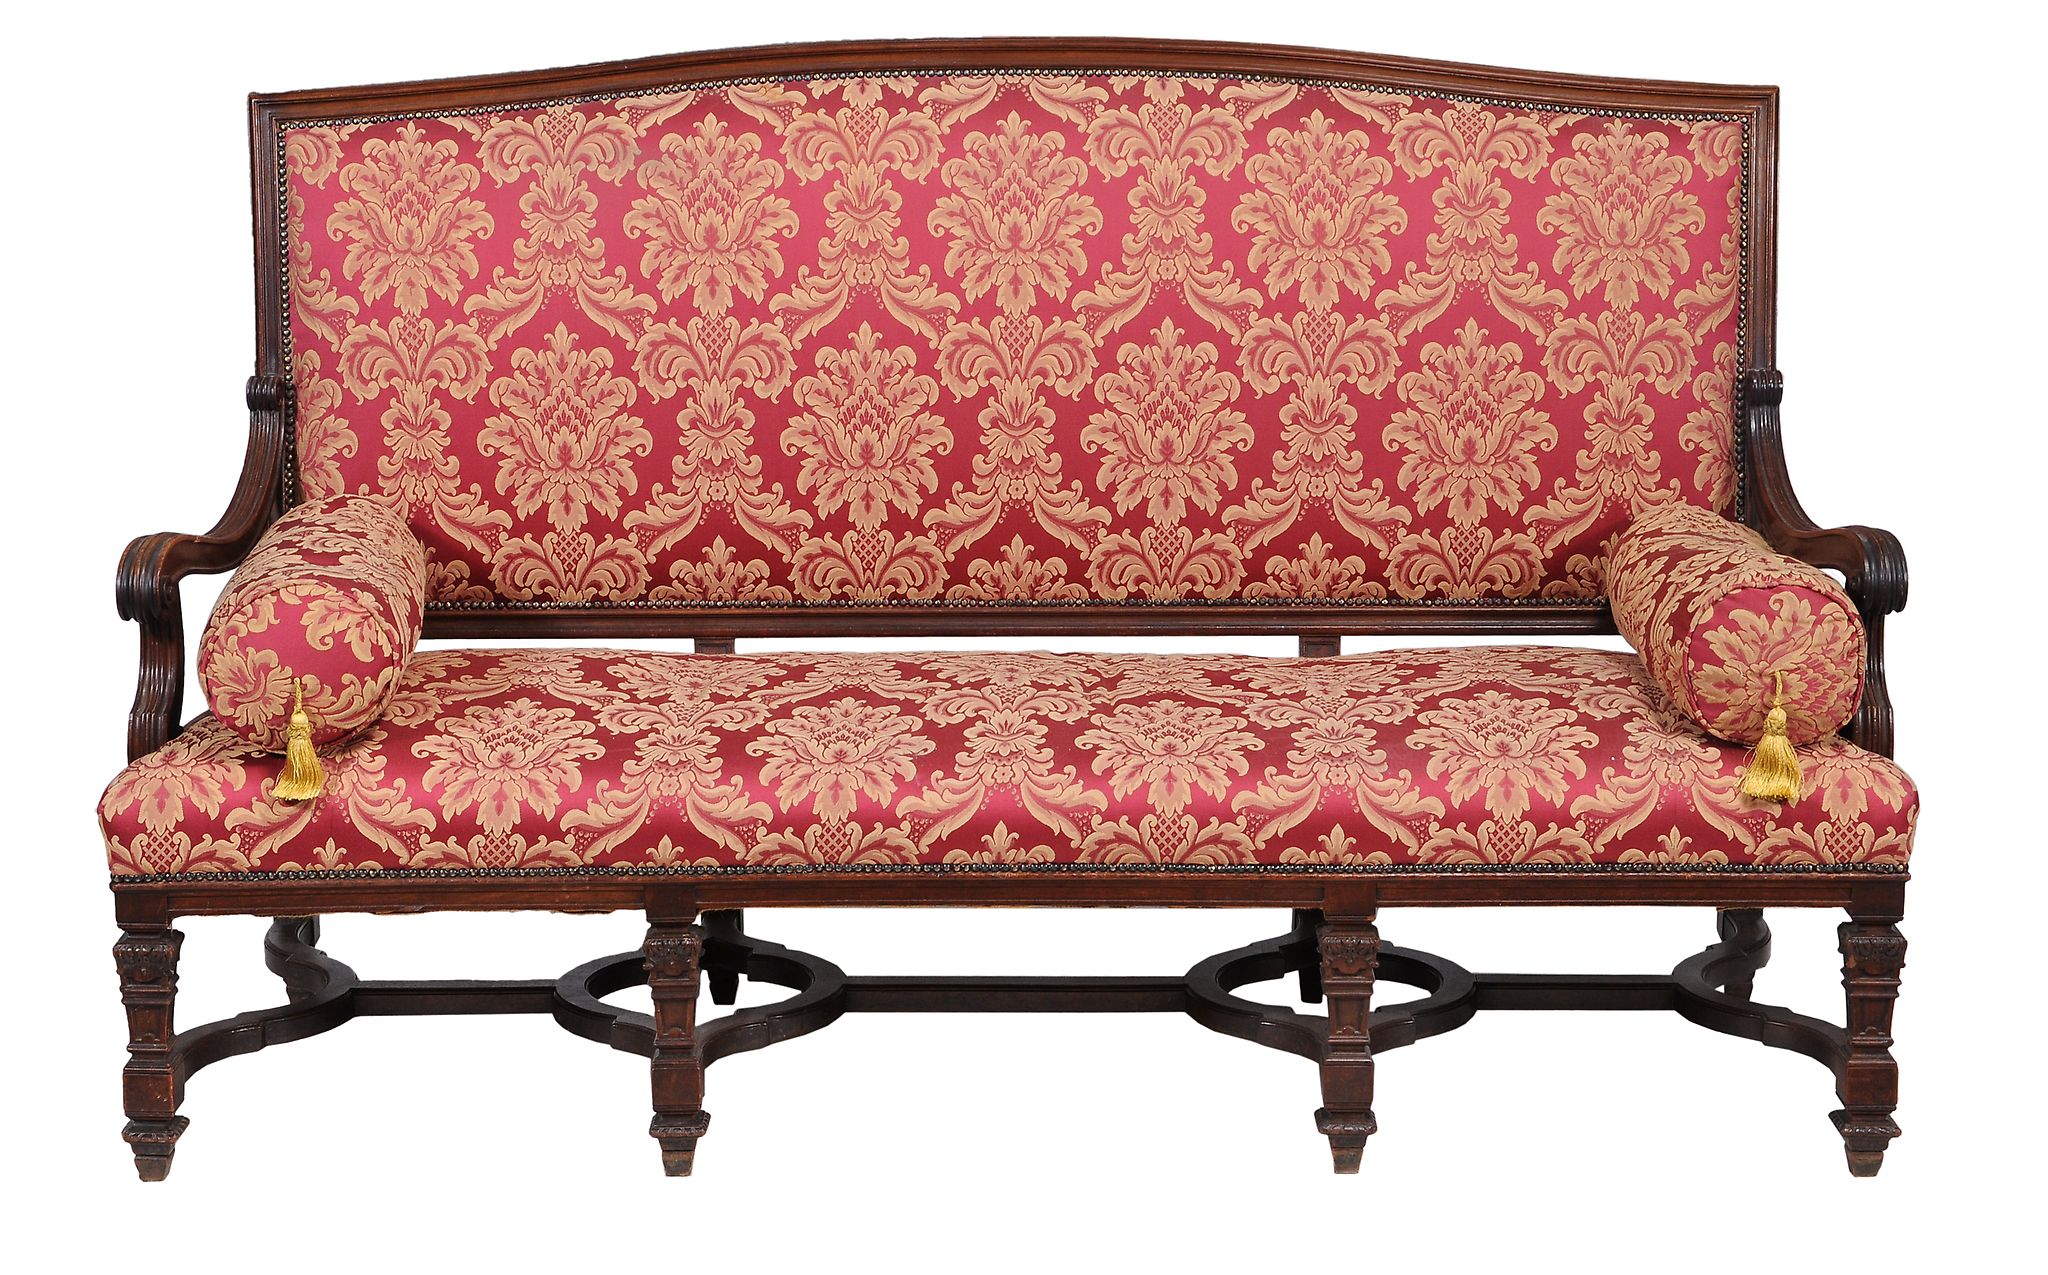 A Continental walnut upholstered sofa, last quarter 19th century  A Continental walnut upholstered